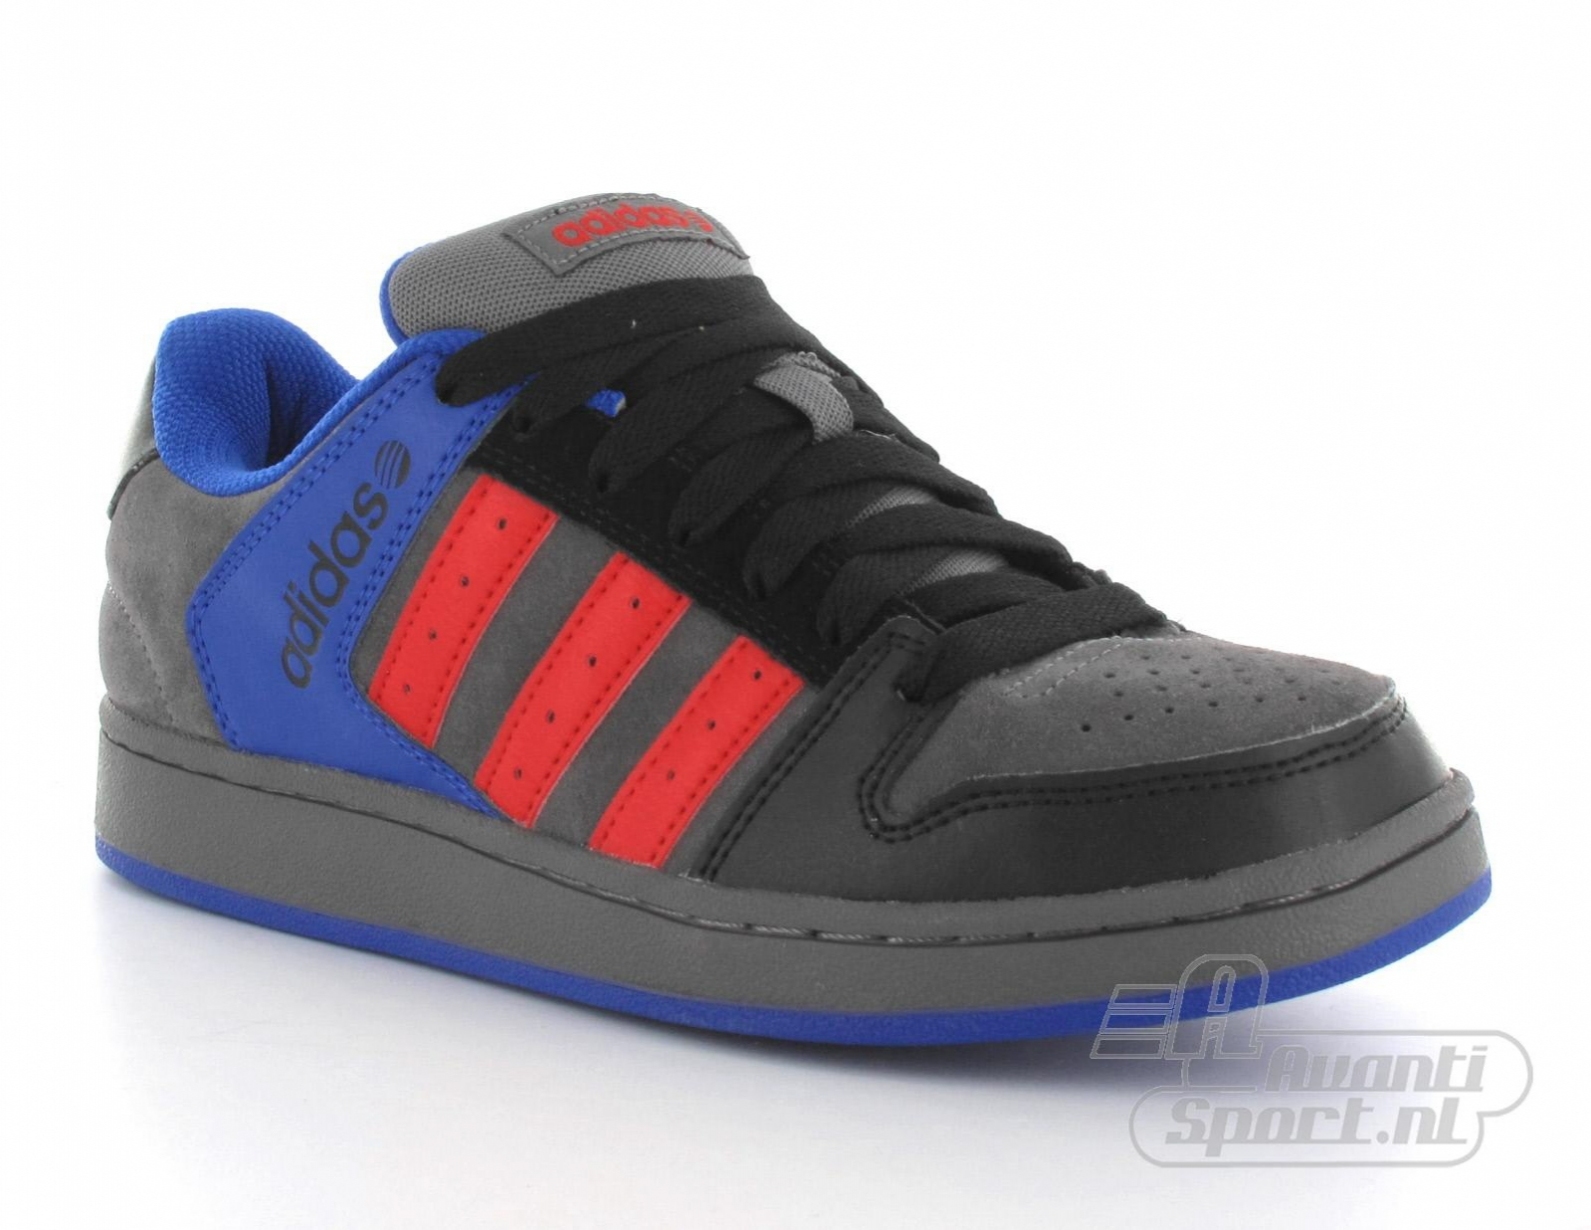 Avantisport - Adidas - Clatsop - Adidas Schoen